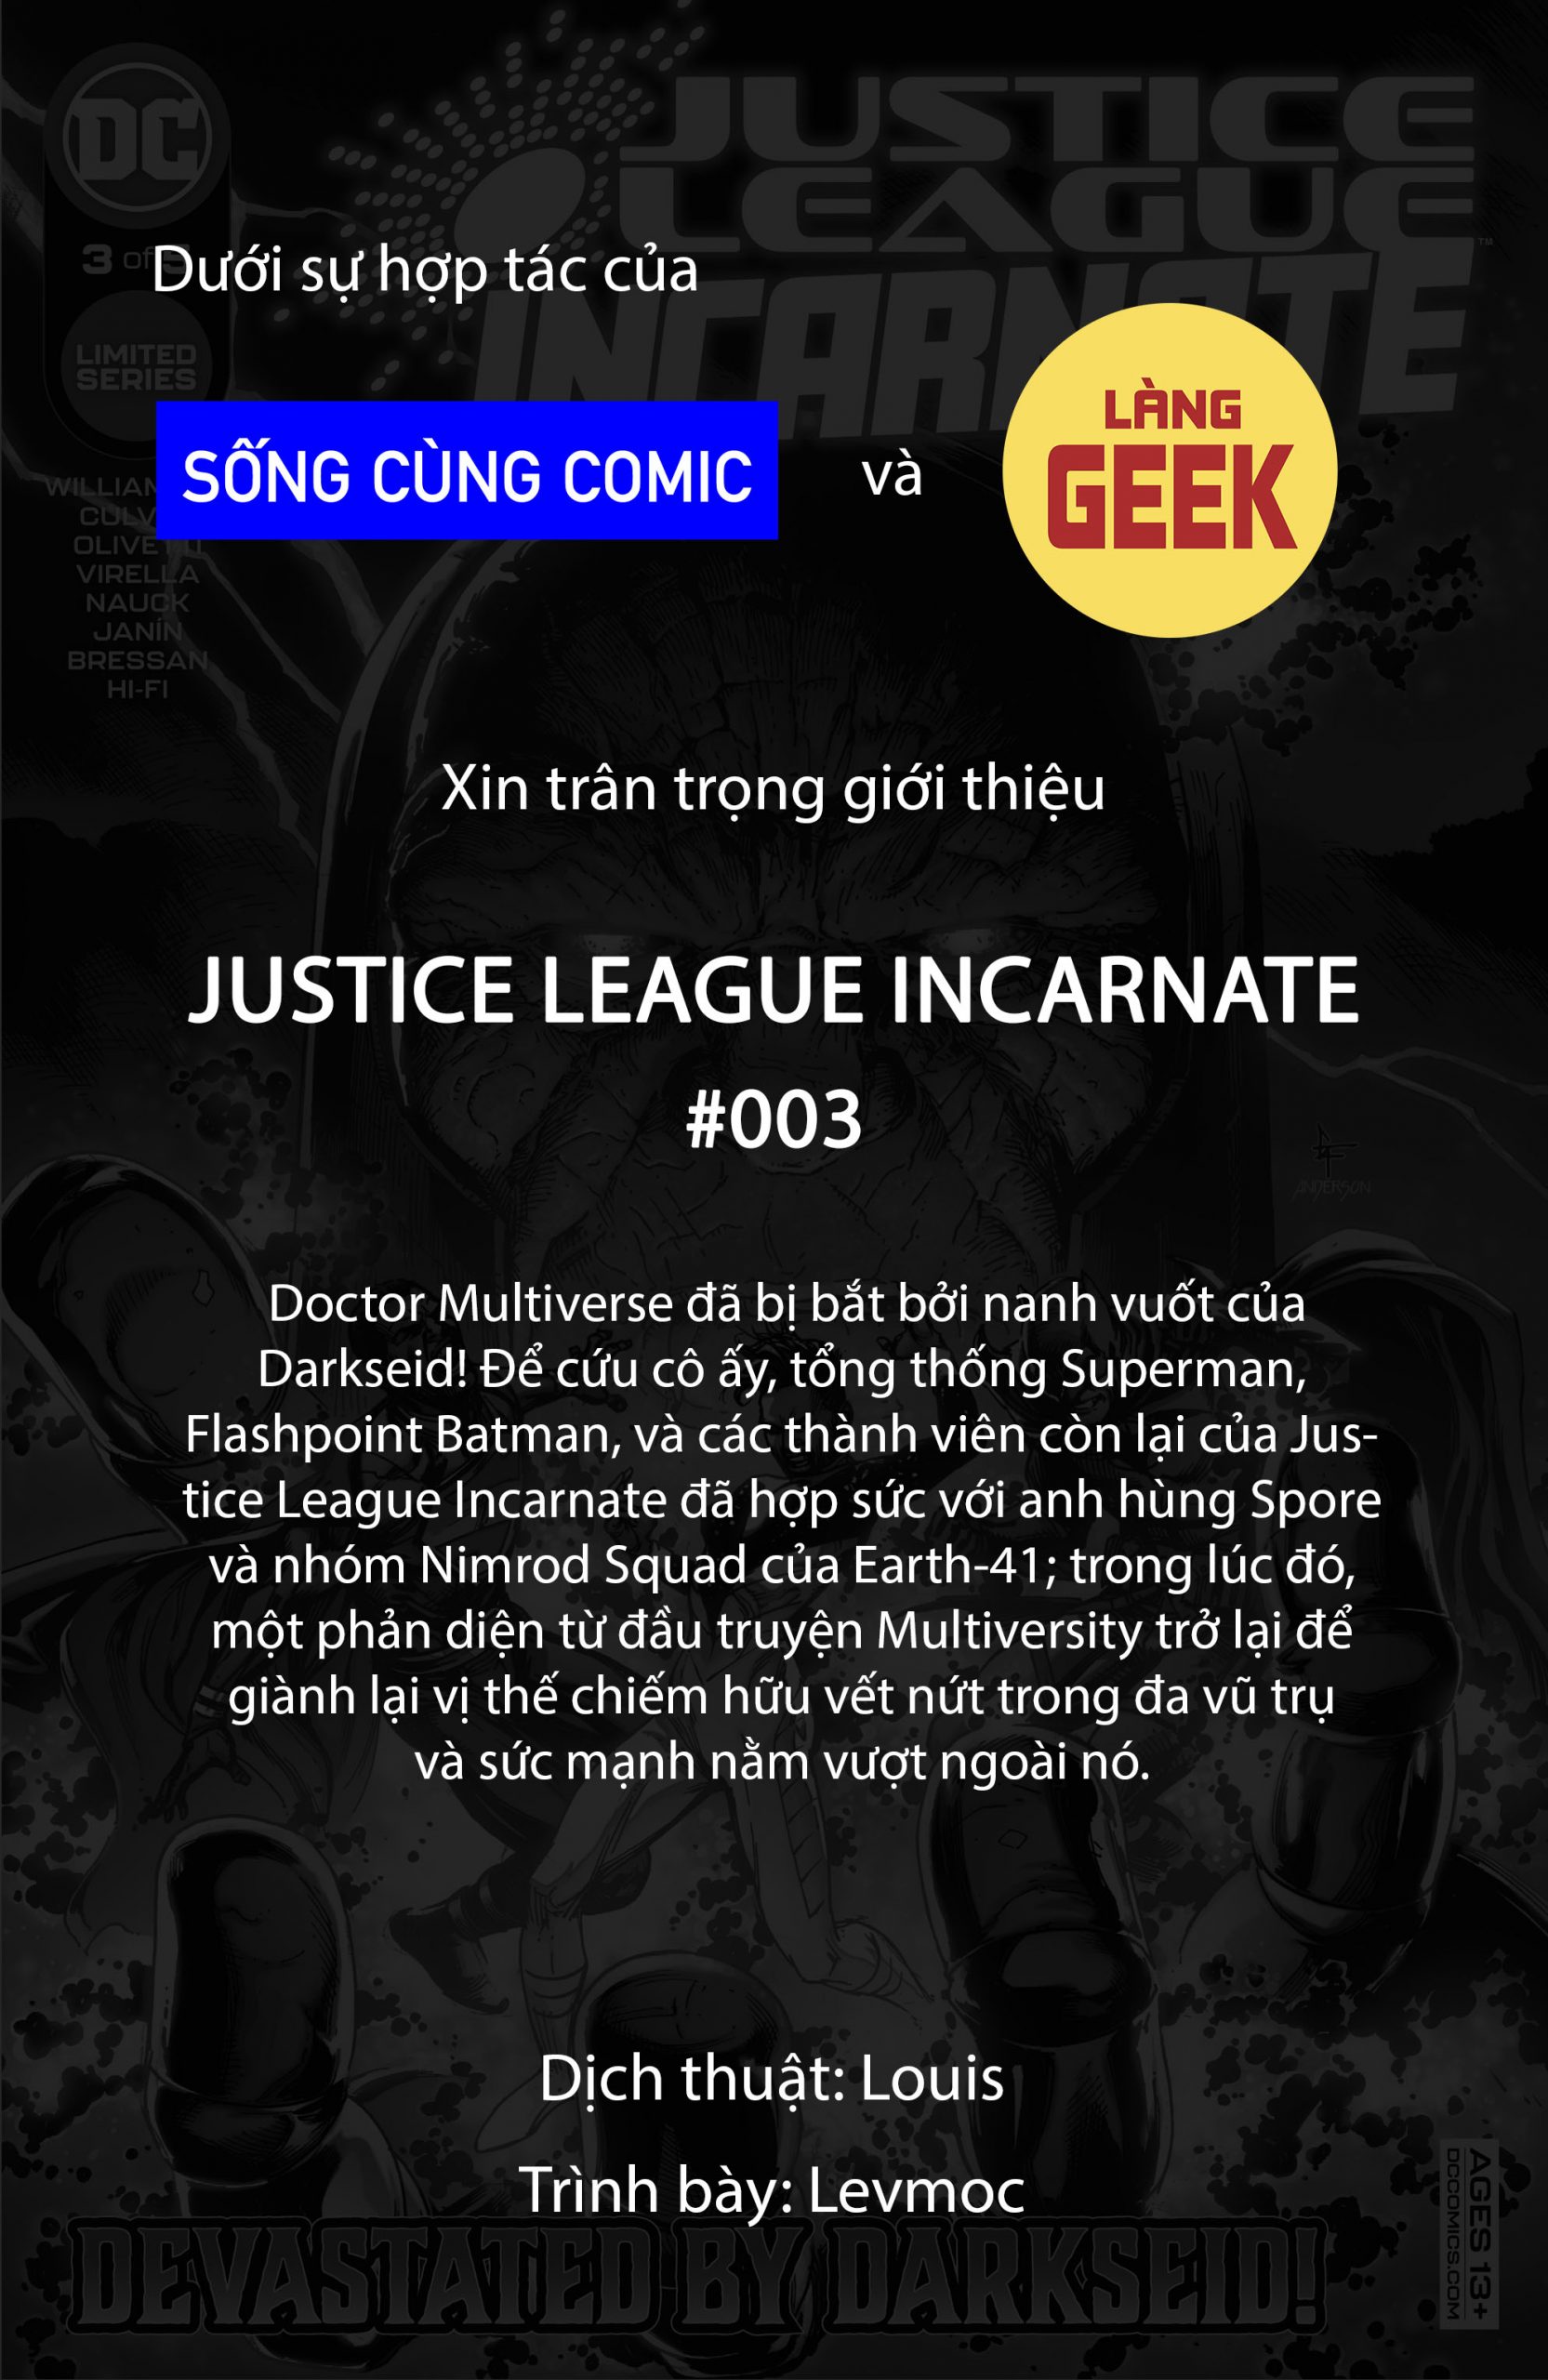 https://langgeek.net/wp-content/uploads/2022/01/Justice-League-Incarnate-2021-003-001-scaled.jpg